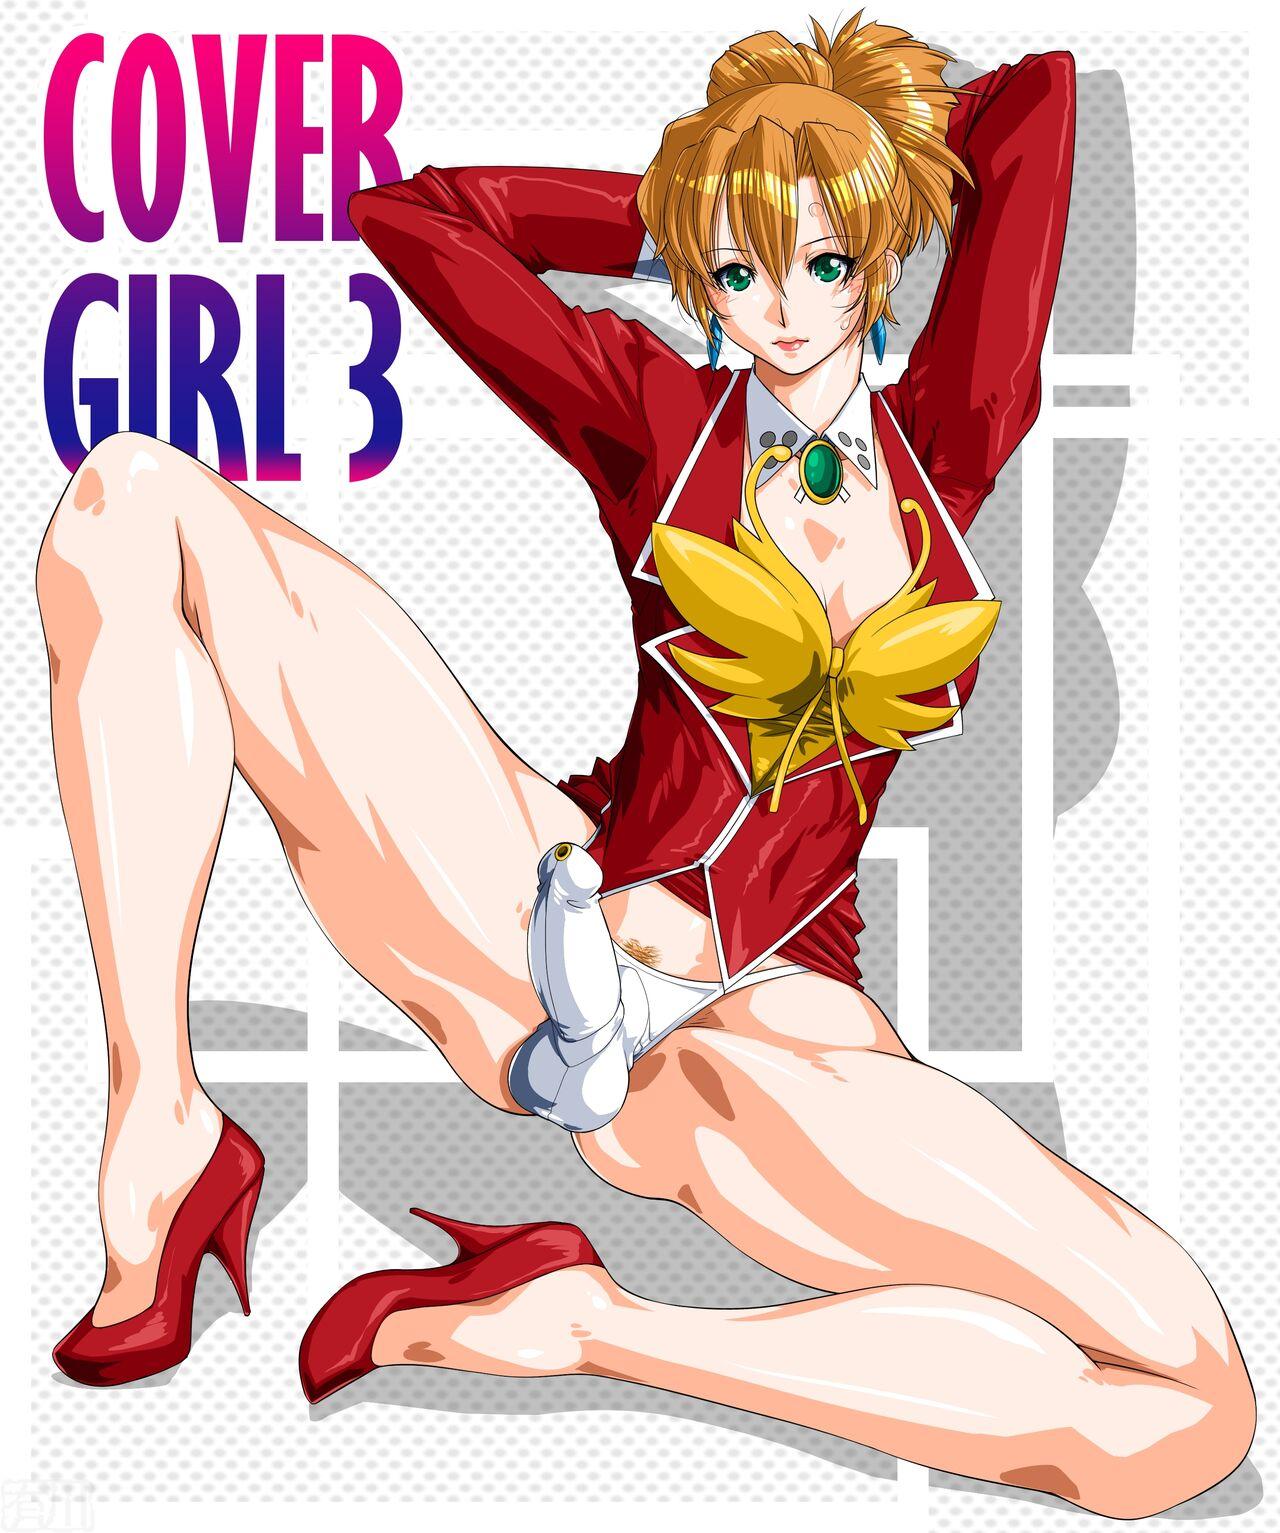 COVER GIRL 3 25